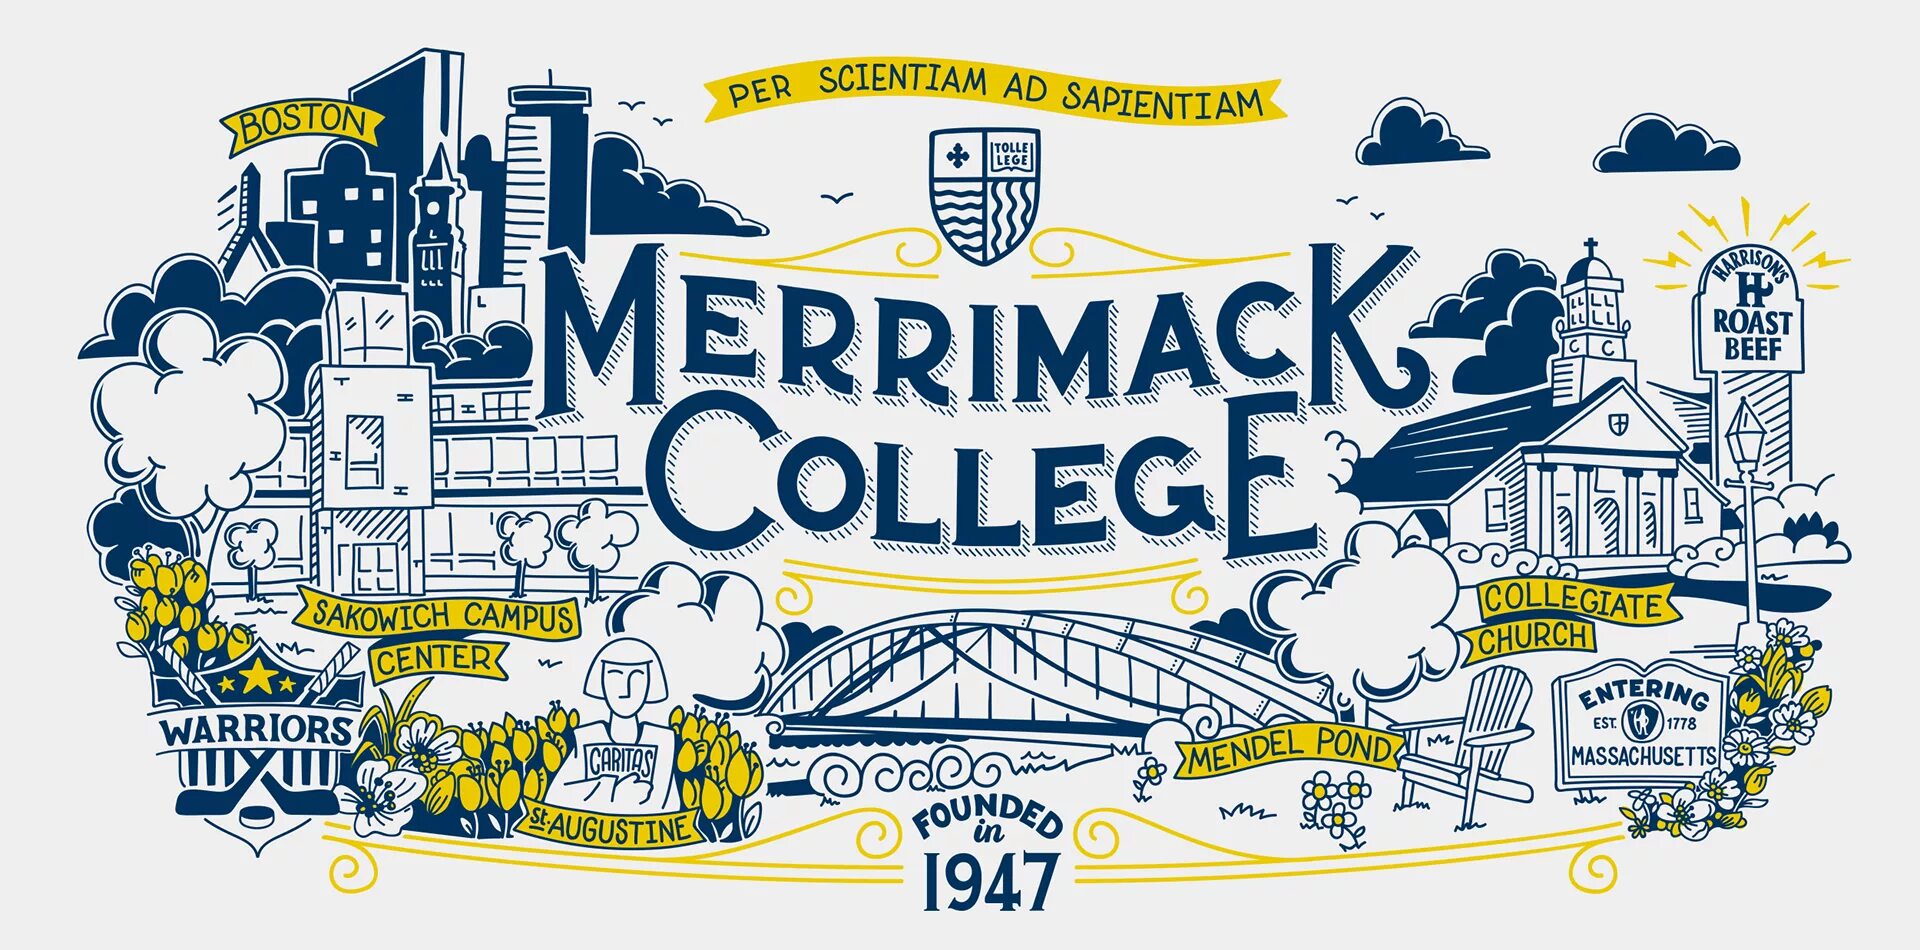 Choosing a college. Merrimack College. Merrimack College фон. Merrimack College facilities. Merrimack College Education.